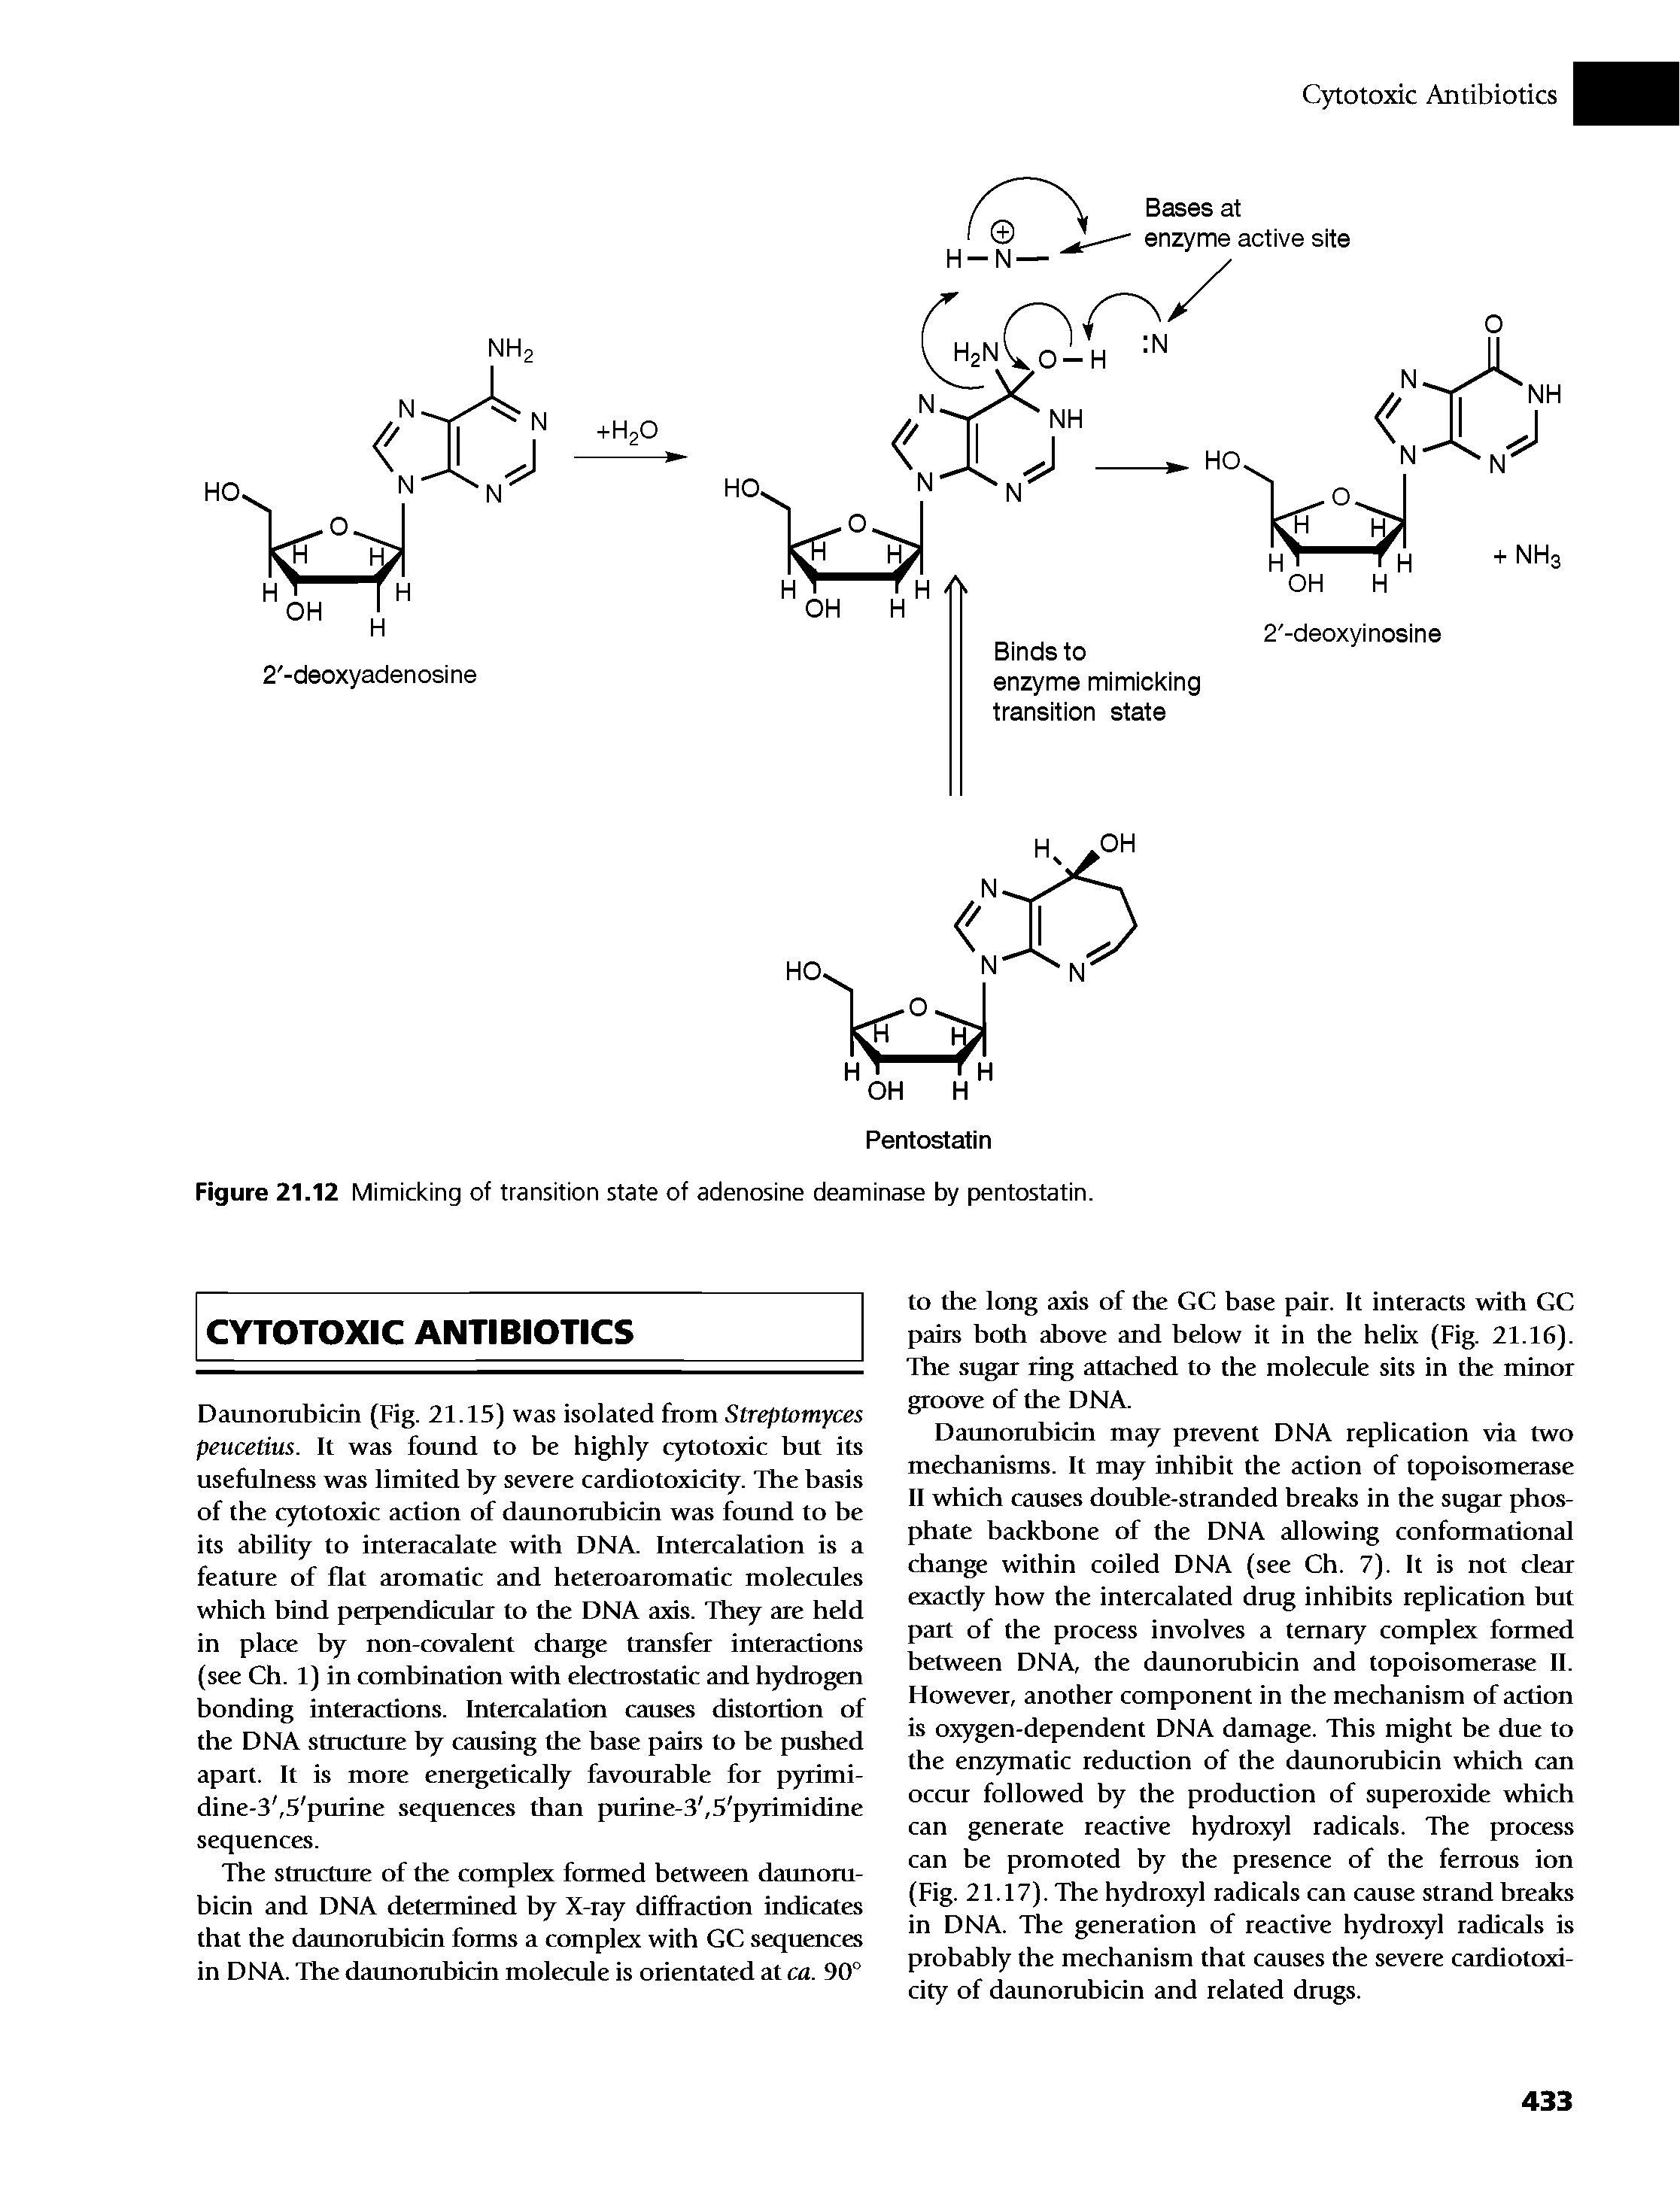 Figure 21.12 Mimicking of transition state of adenosine deaminase by pentostatin.